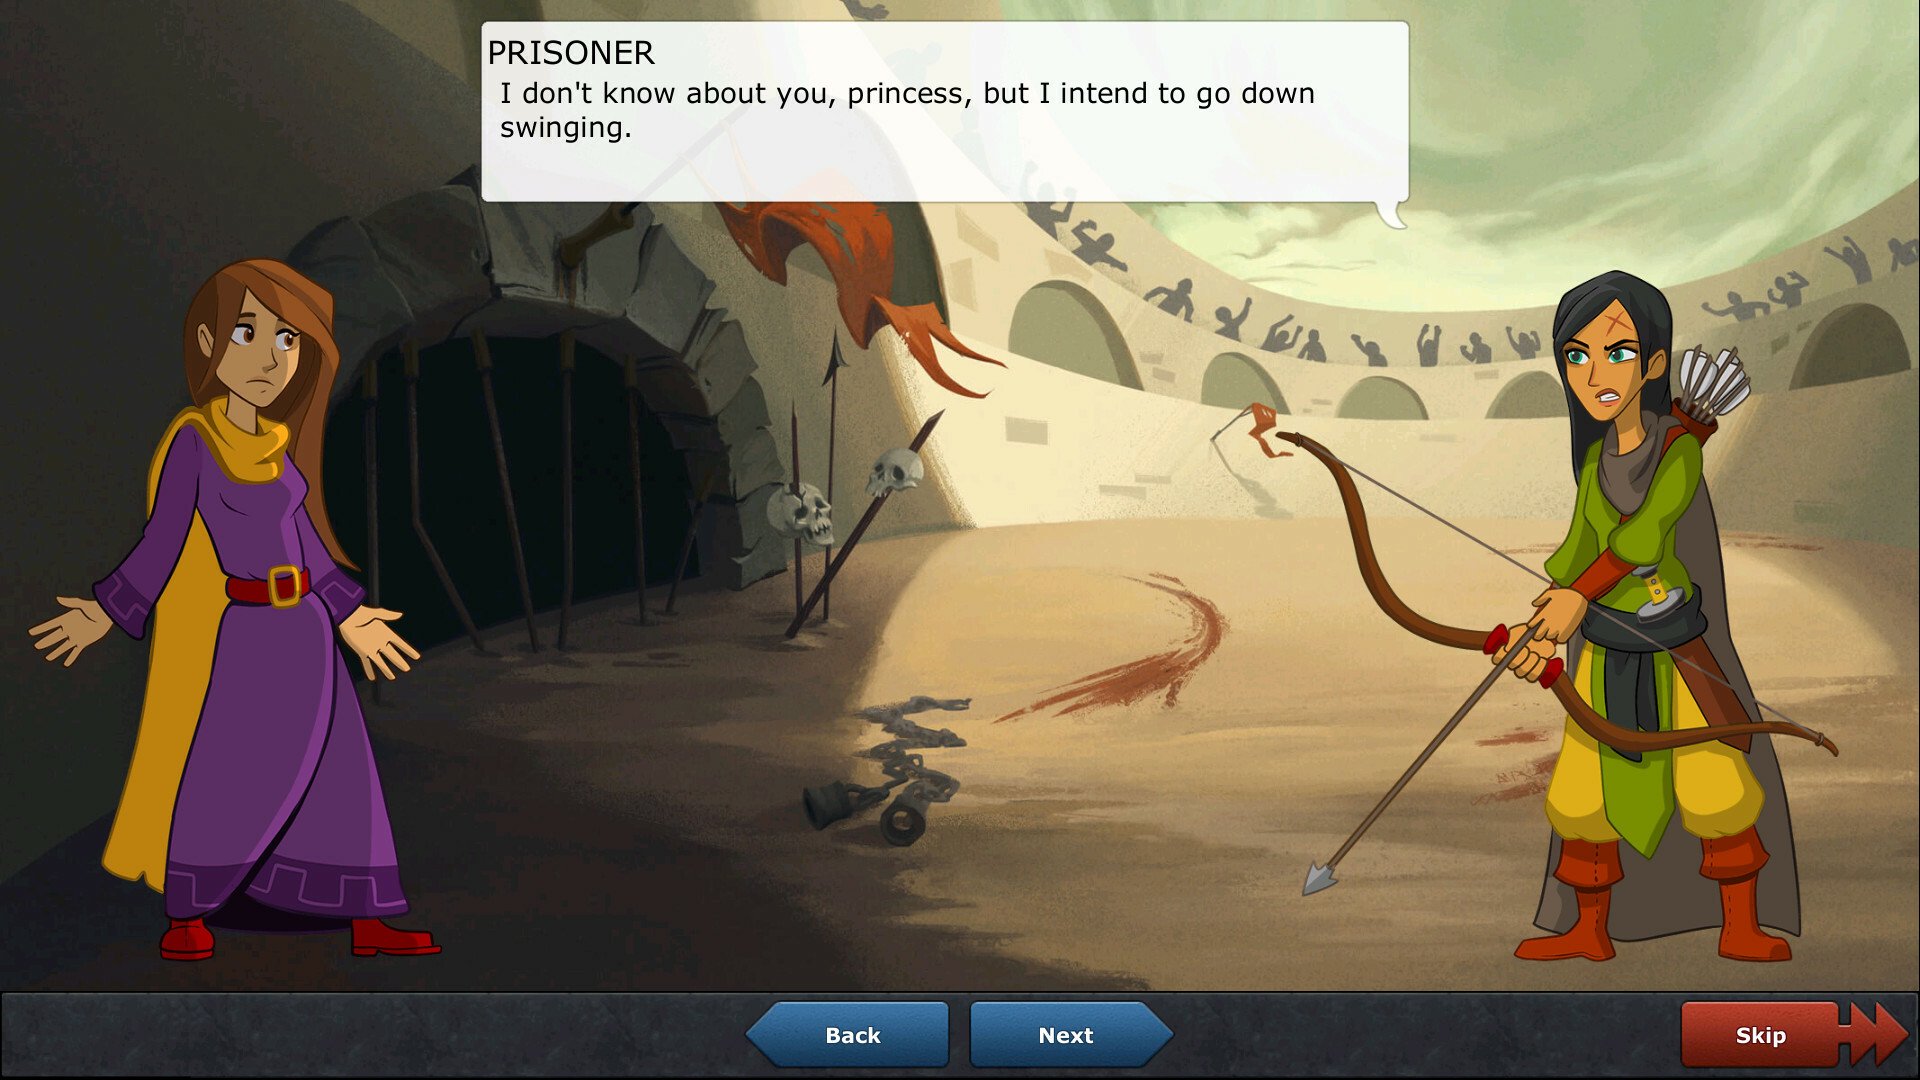 Скриншот 2 к игре Defender's Quest v.2.2.6 (21192) [GOG] (2012)